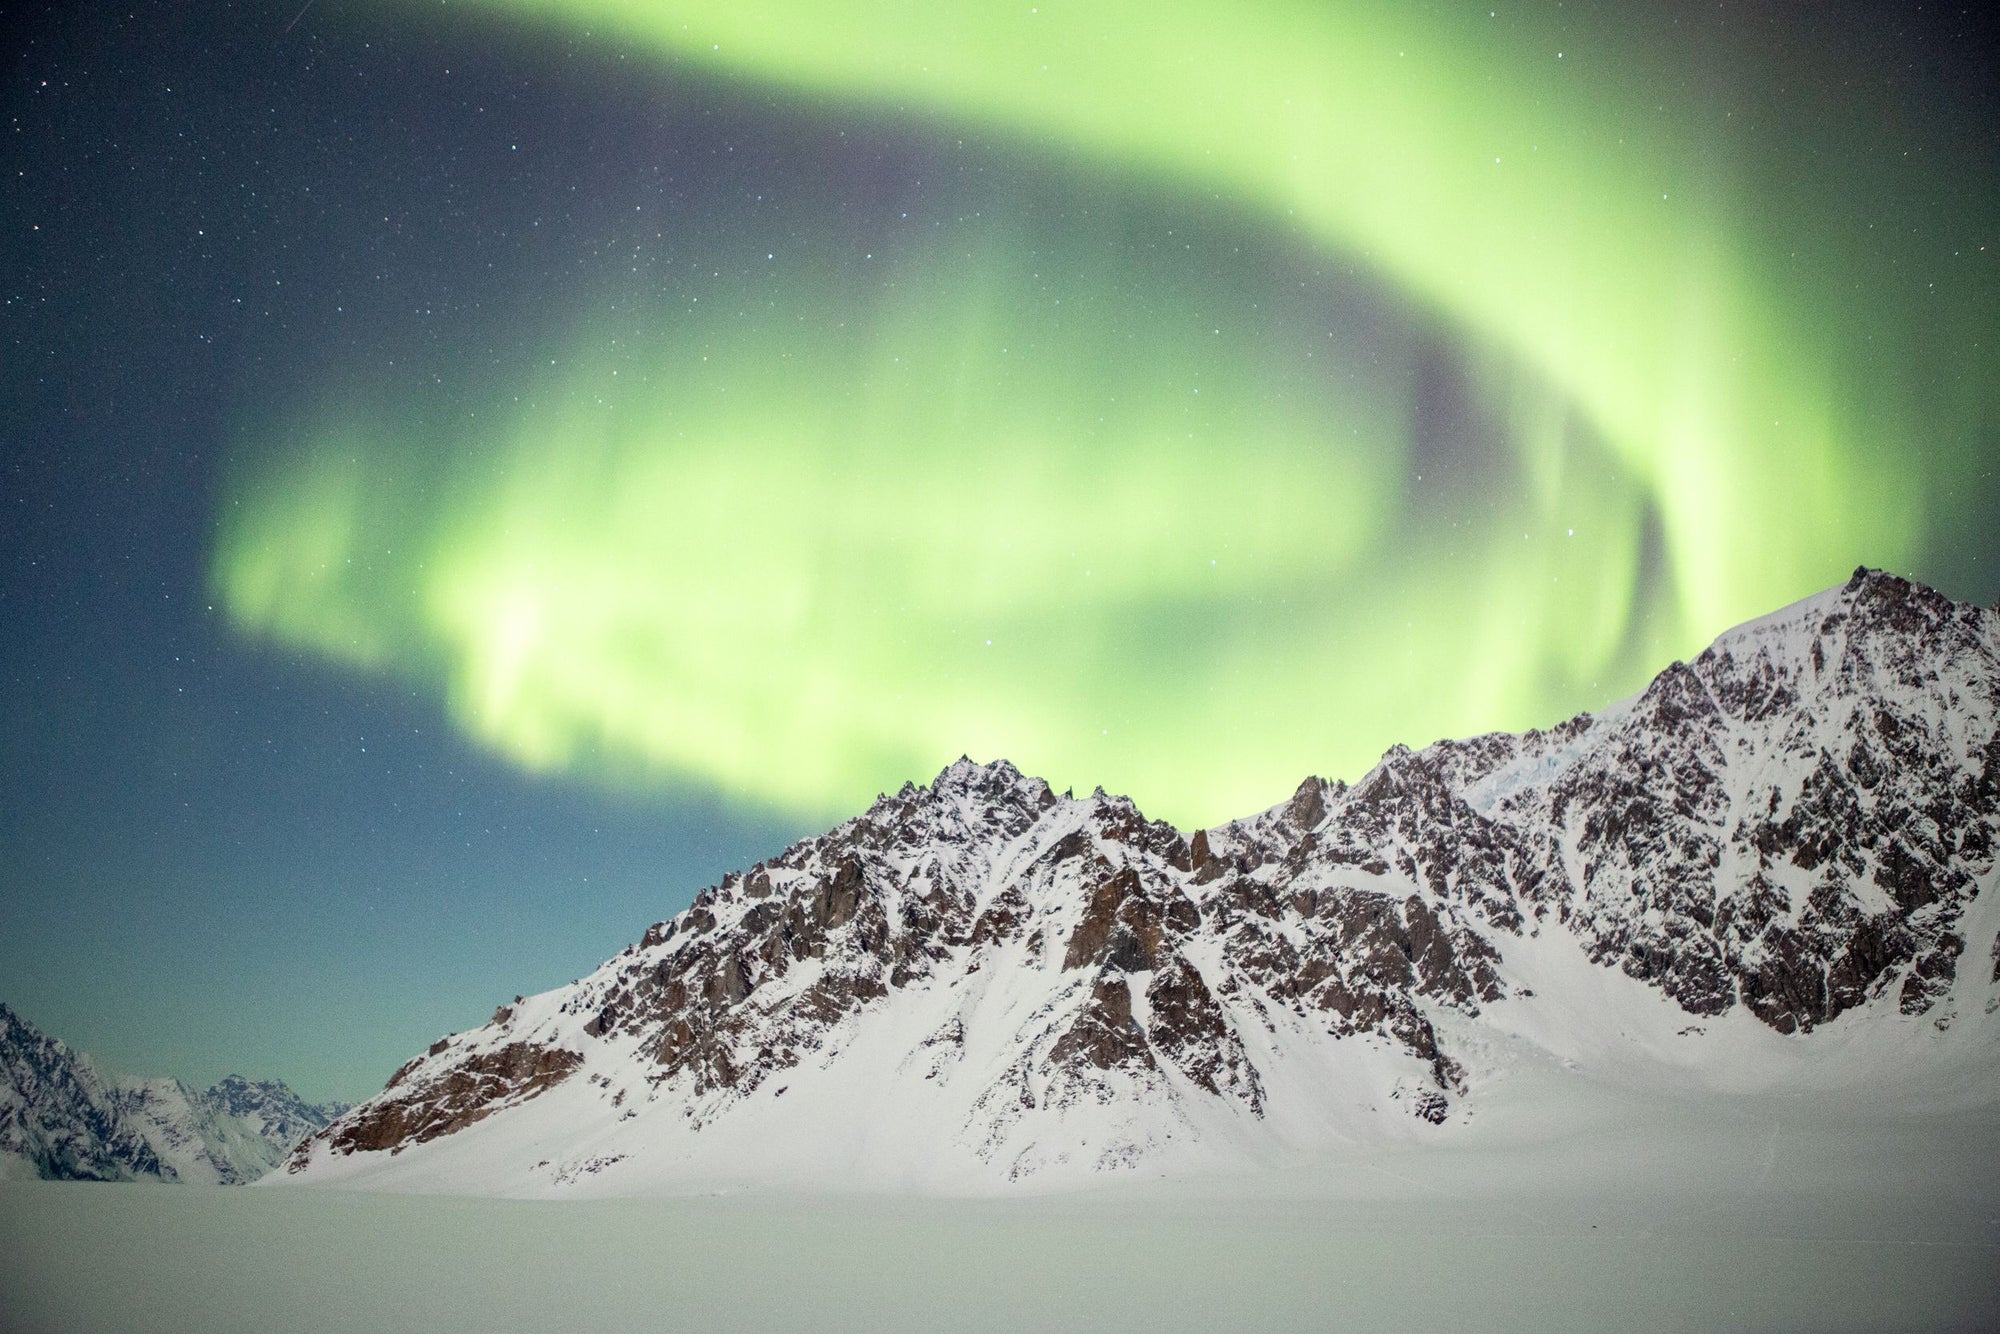 The Aurora Borealis shines above snow capped peaks.